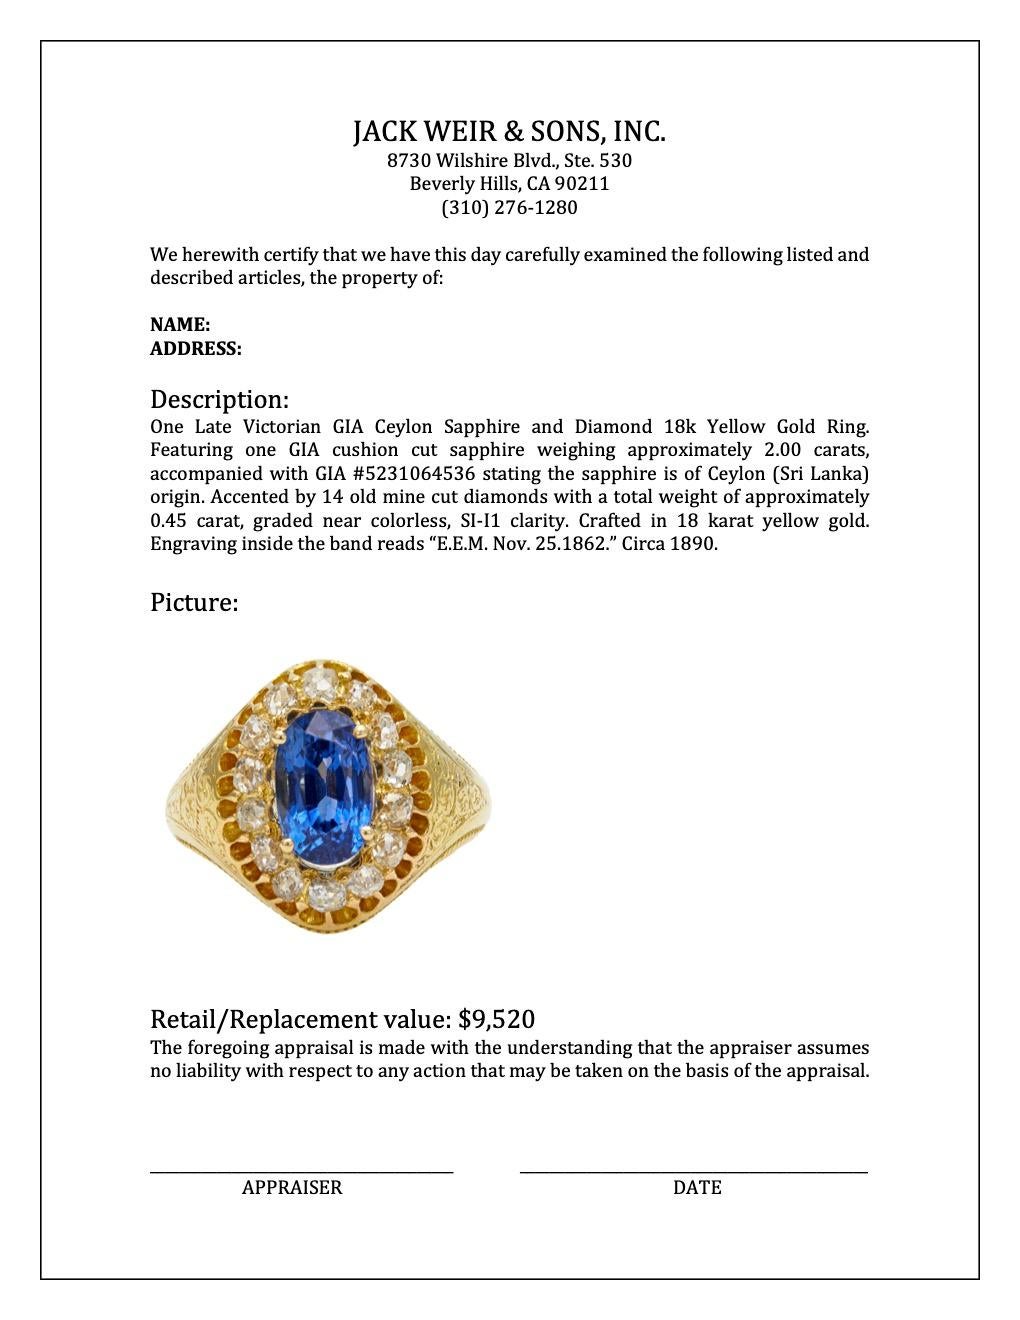 Late Victorian GIA Ceylon Sapphire and Diamond 18k Yellow Gold Ring 2